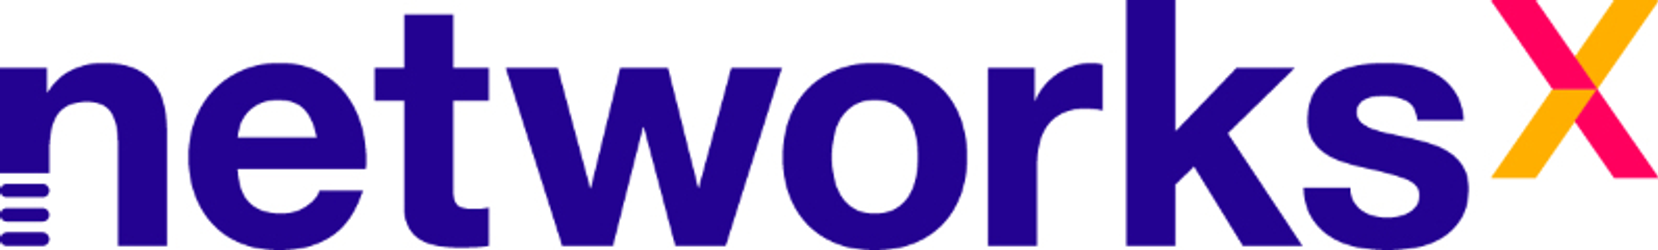 NetworksX logo